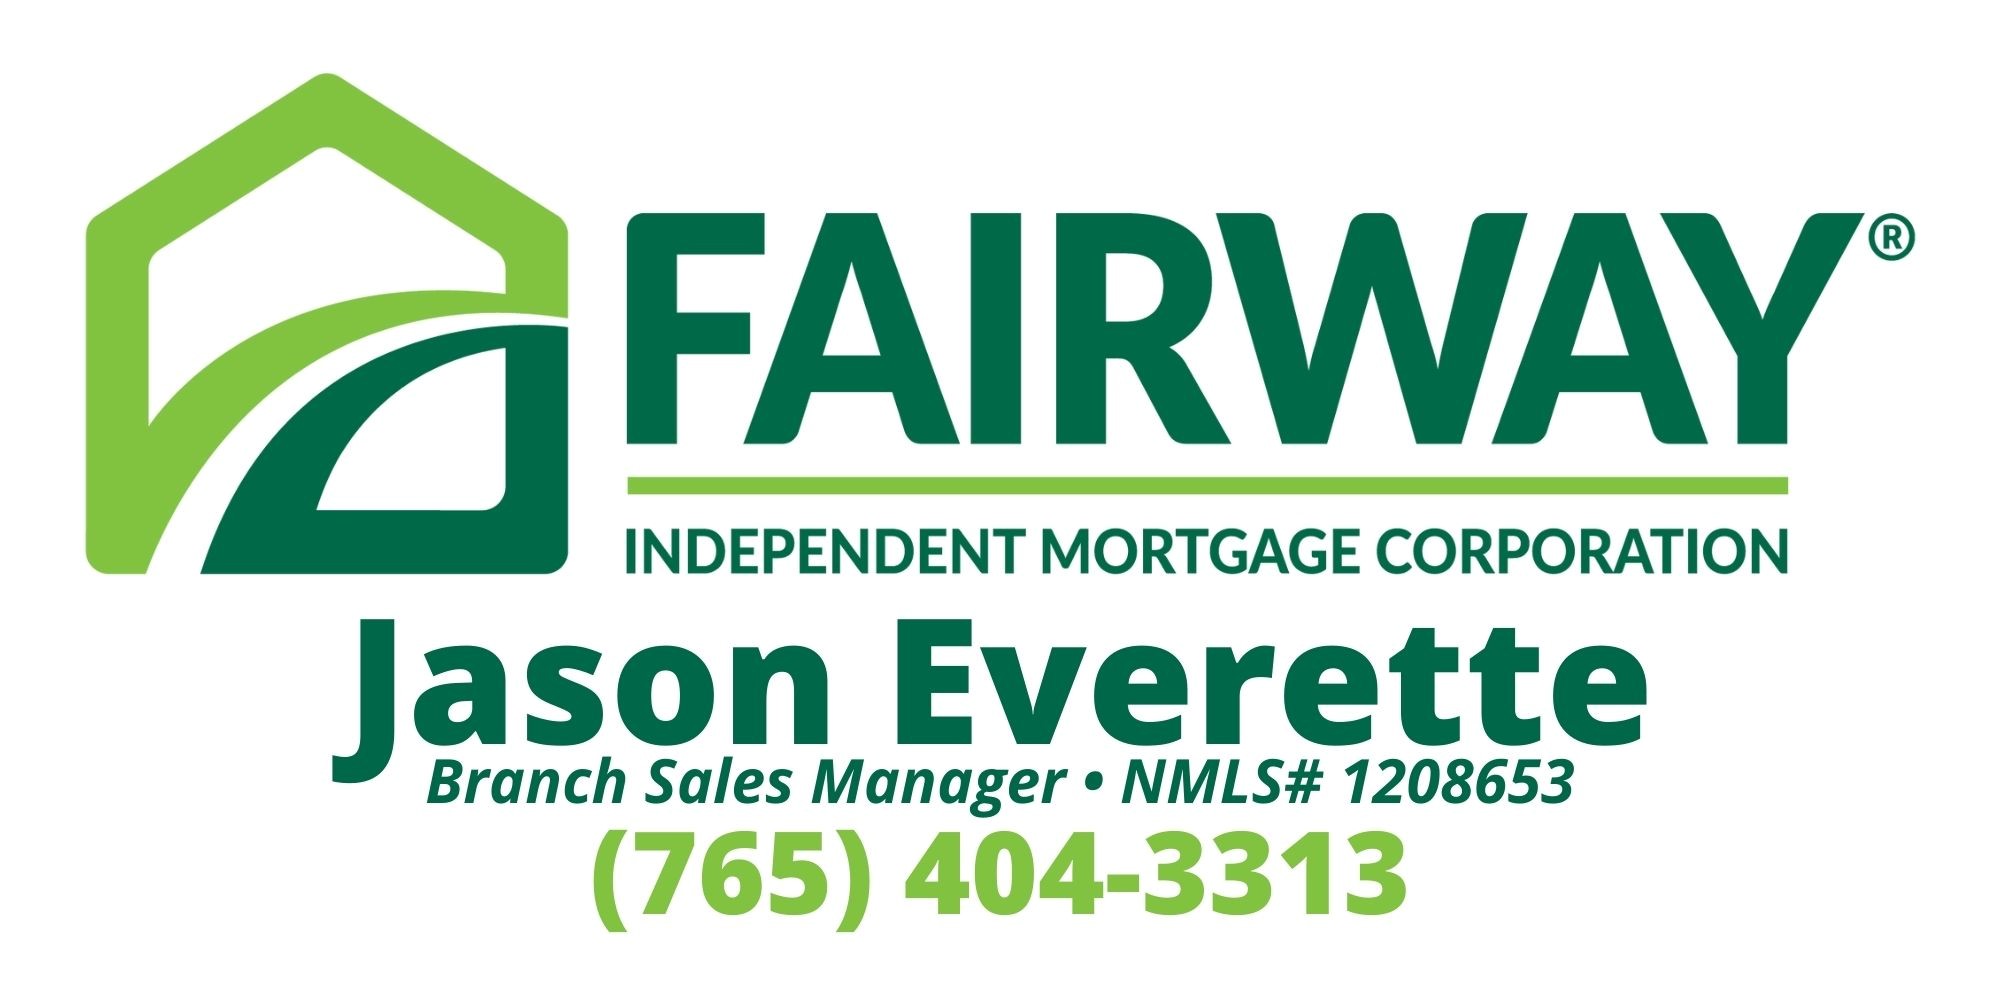 Fairway Mortgage Everette